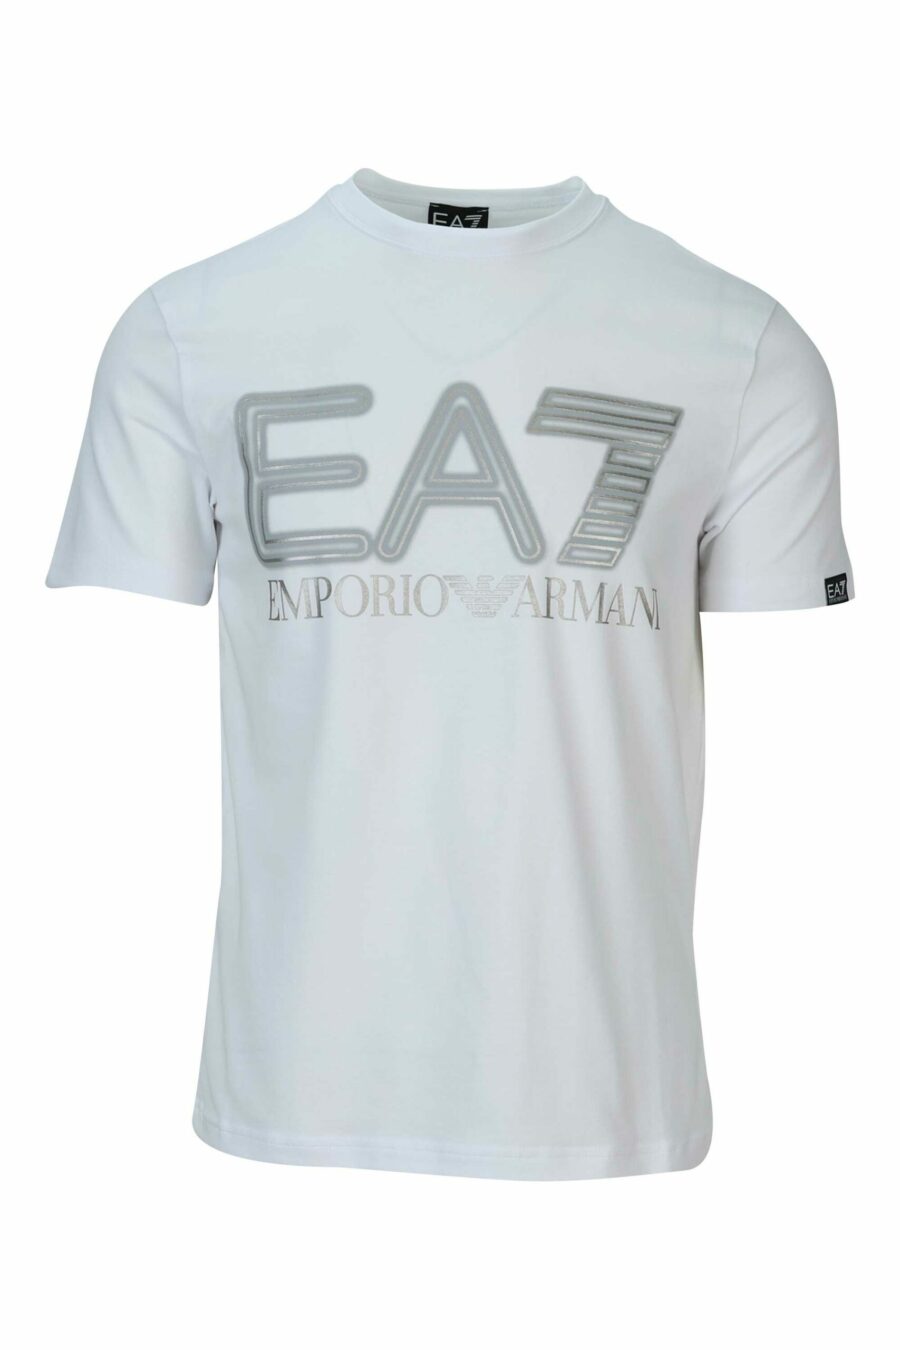 T-shirt blanc avec maxilogo "lux identity" en argent néon - 8057970672319 scaled